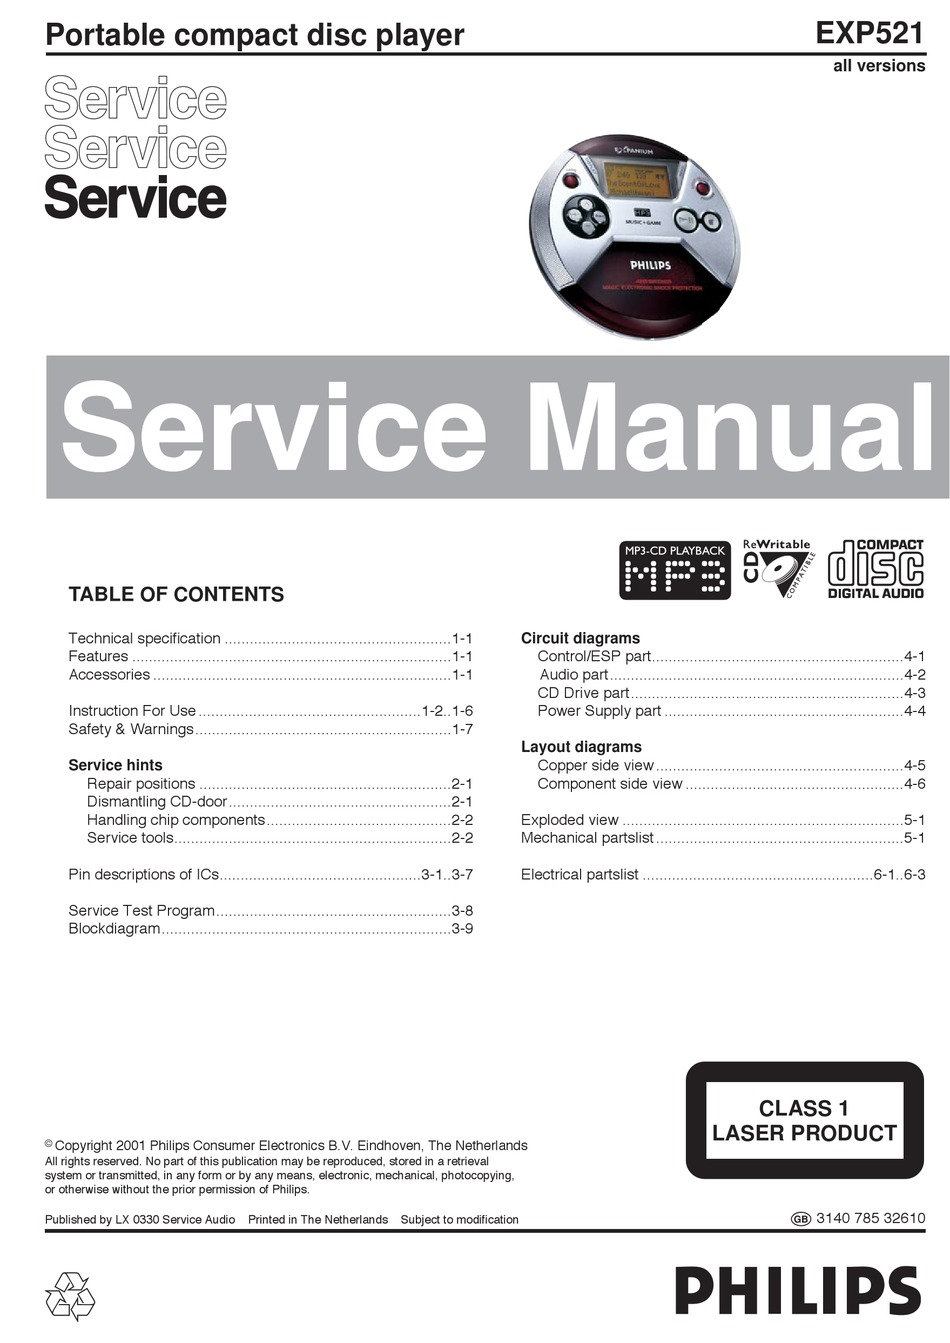 Service manual philips. Плеер Philips exp521.